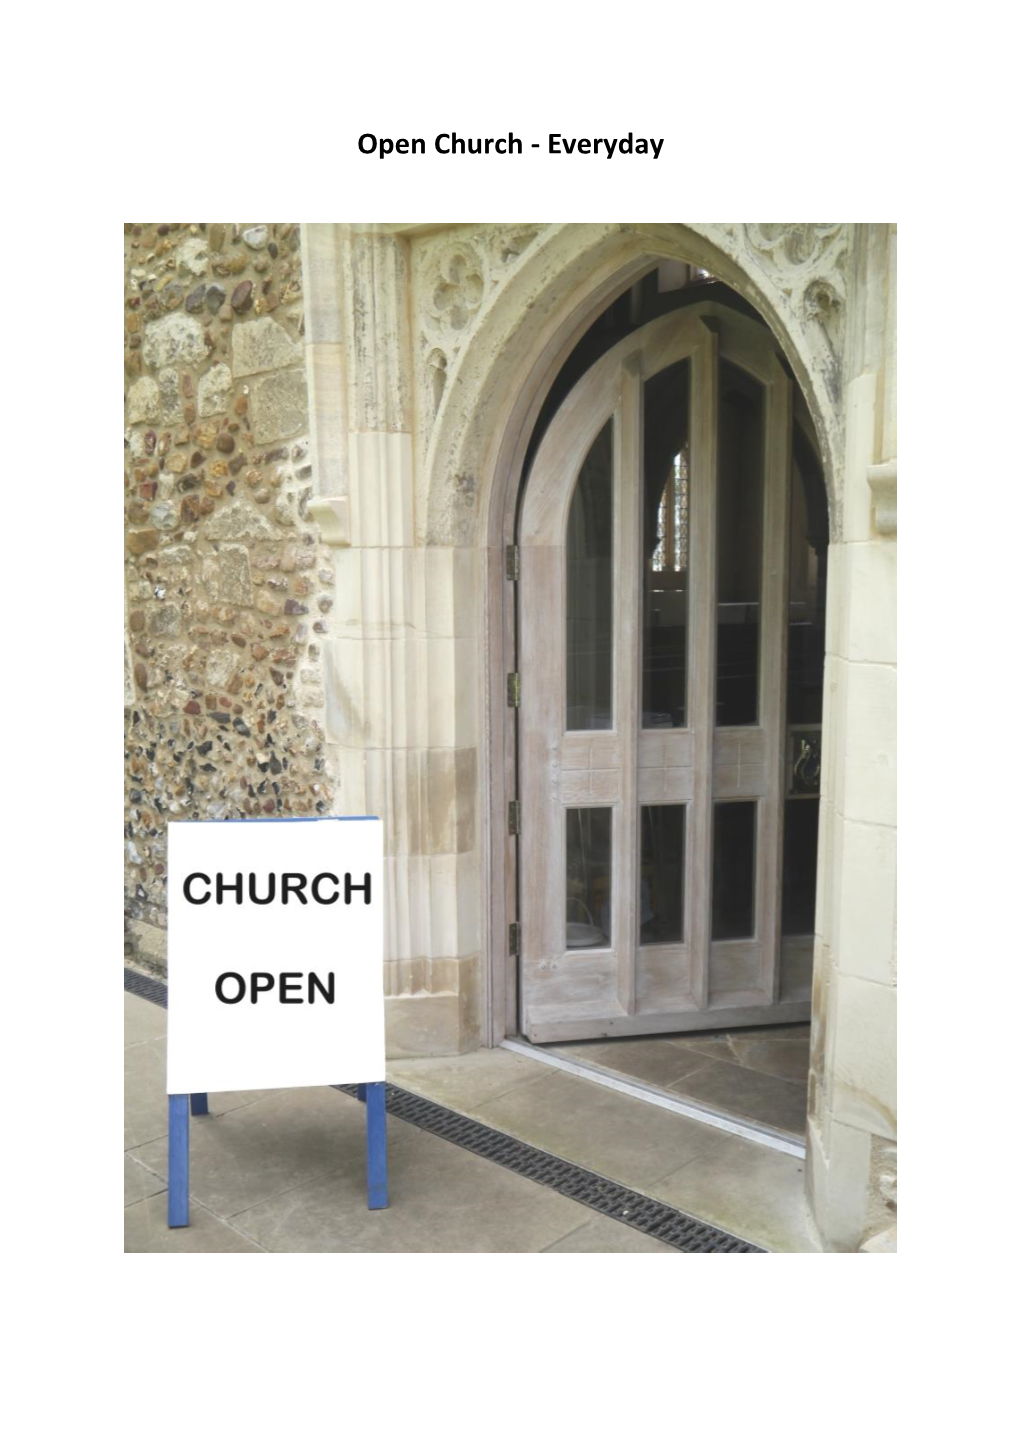 Open Church - Everyday